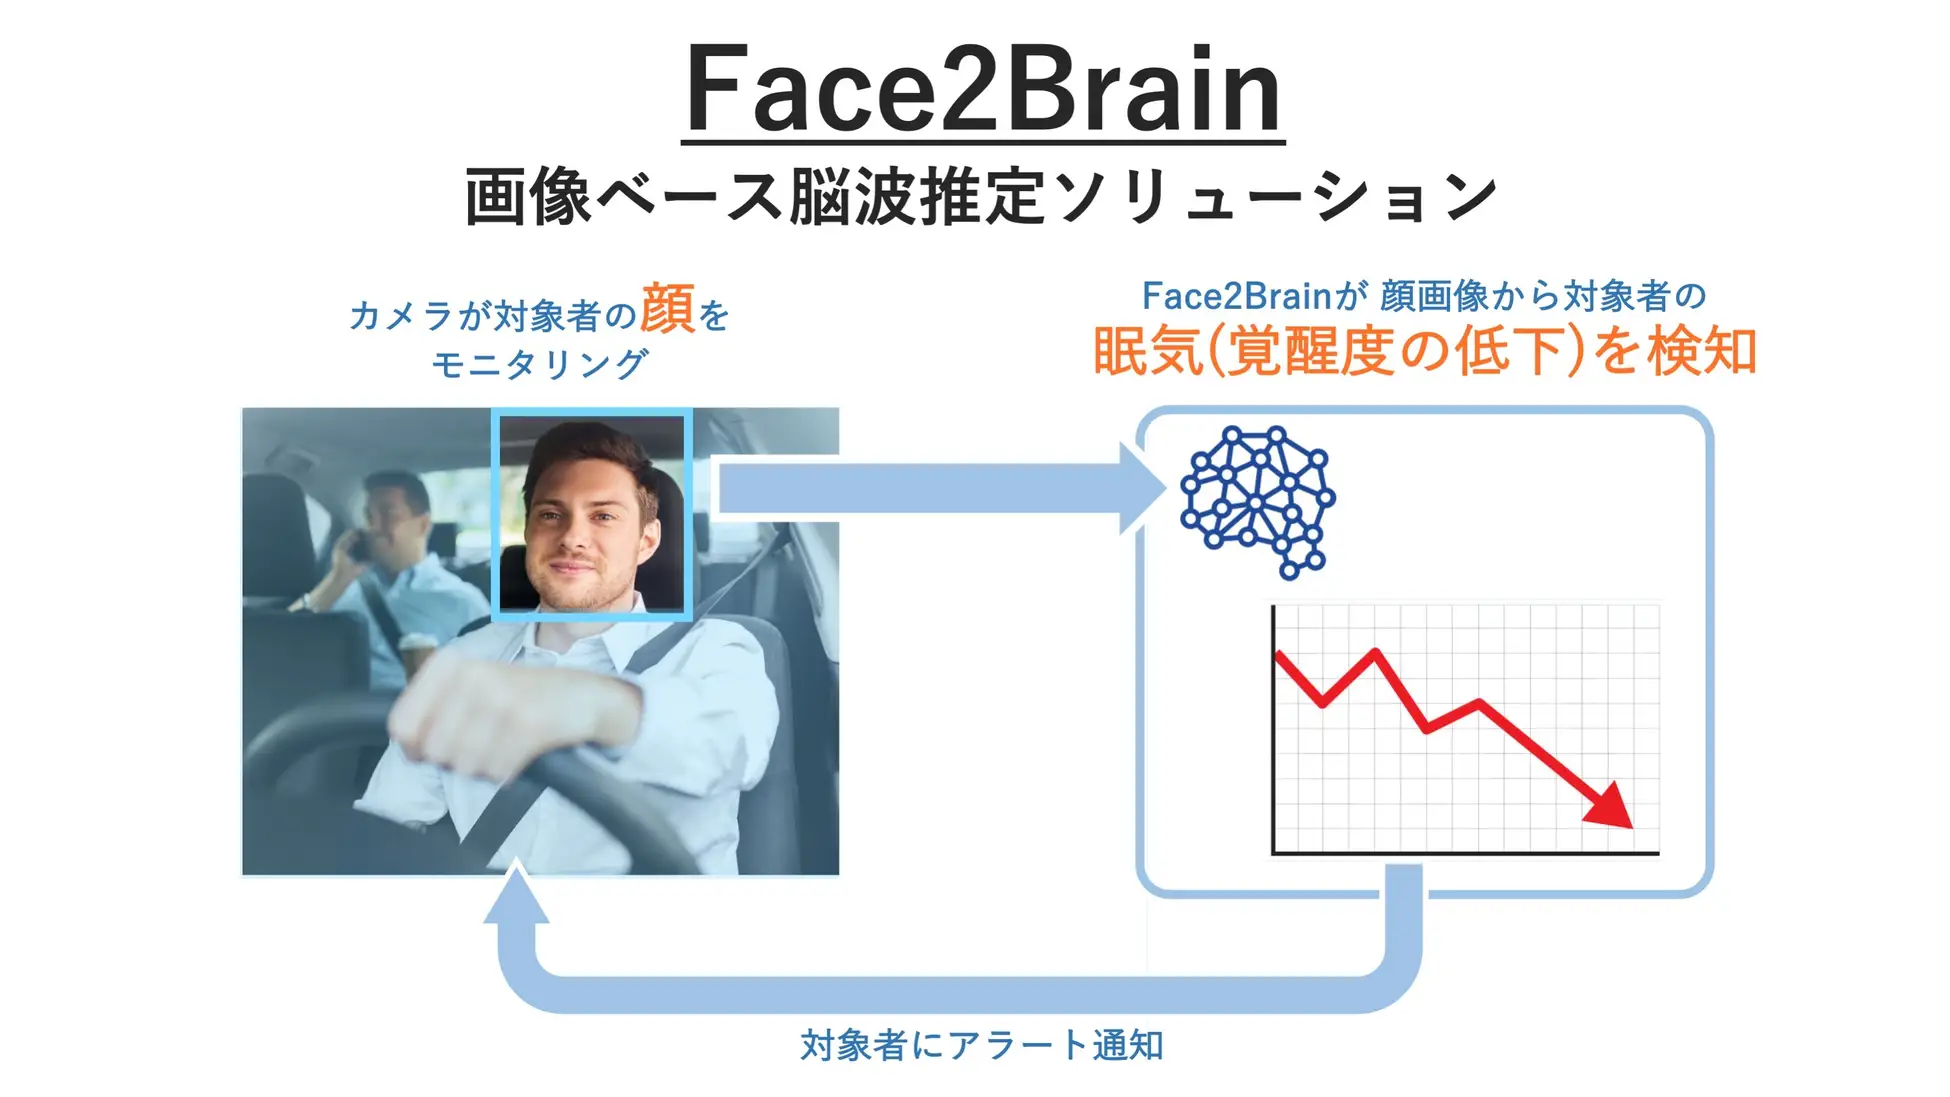 Face2Brain